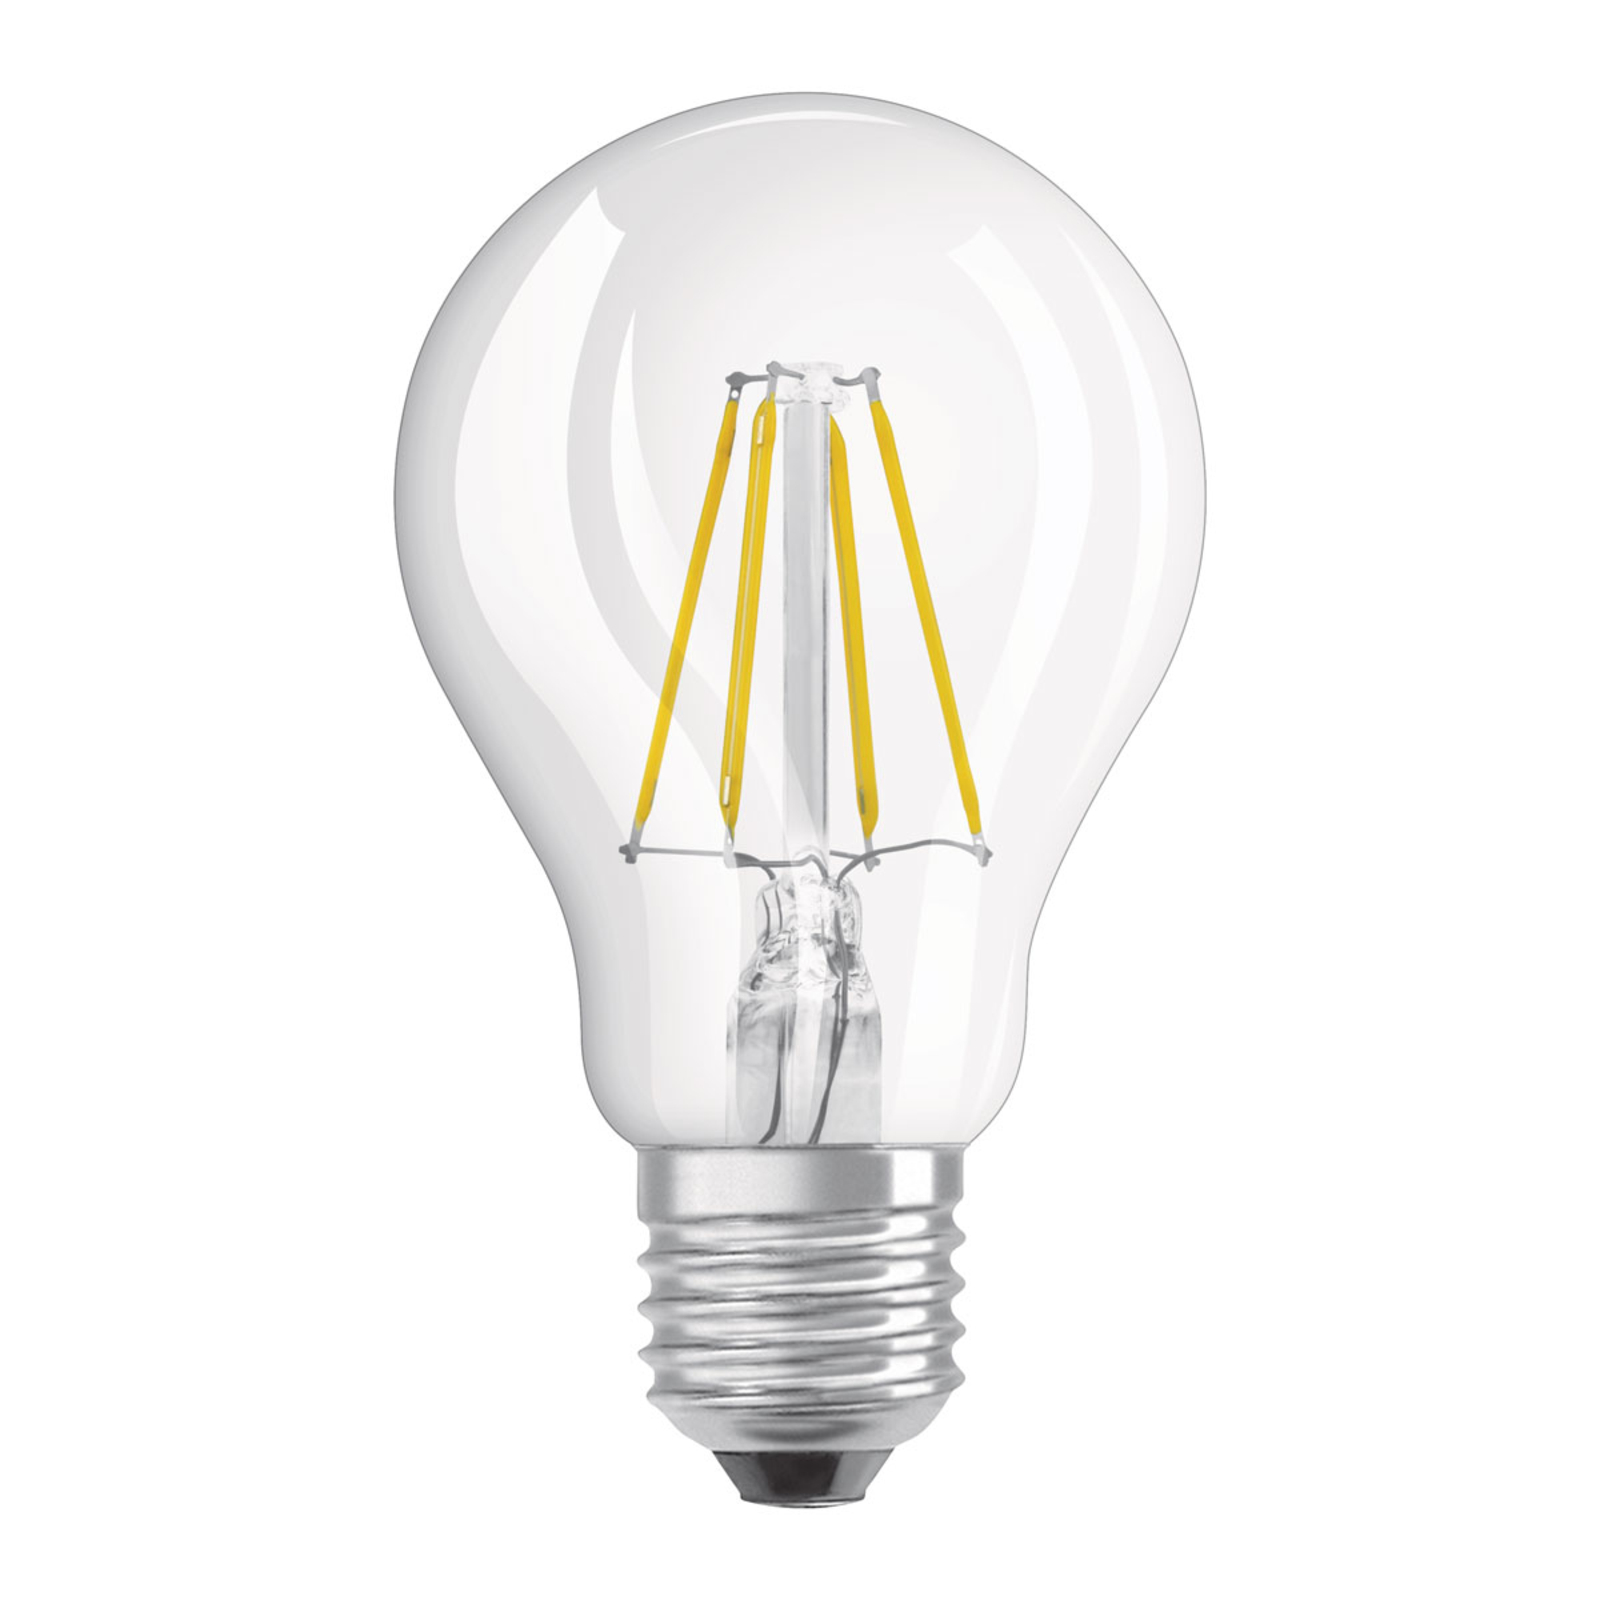 OSRAM LED lamp E27 4,8W Classic filament dim | Lampen24.nl